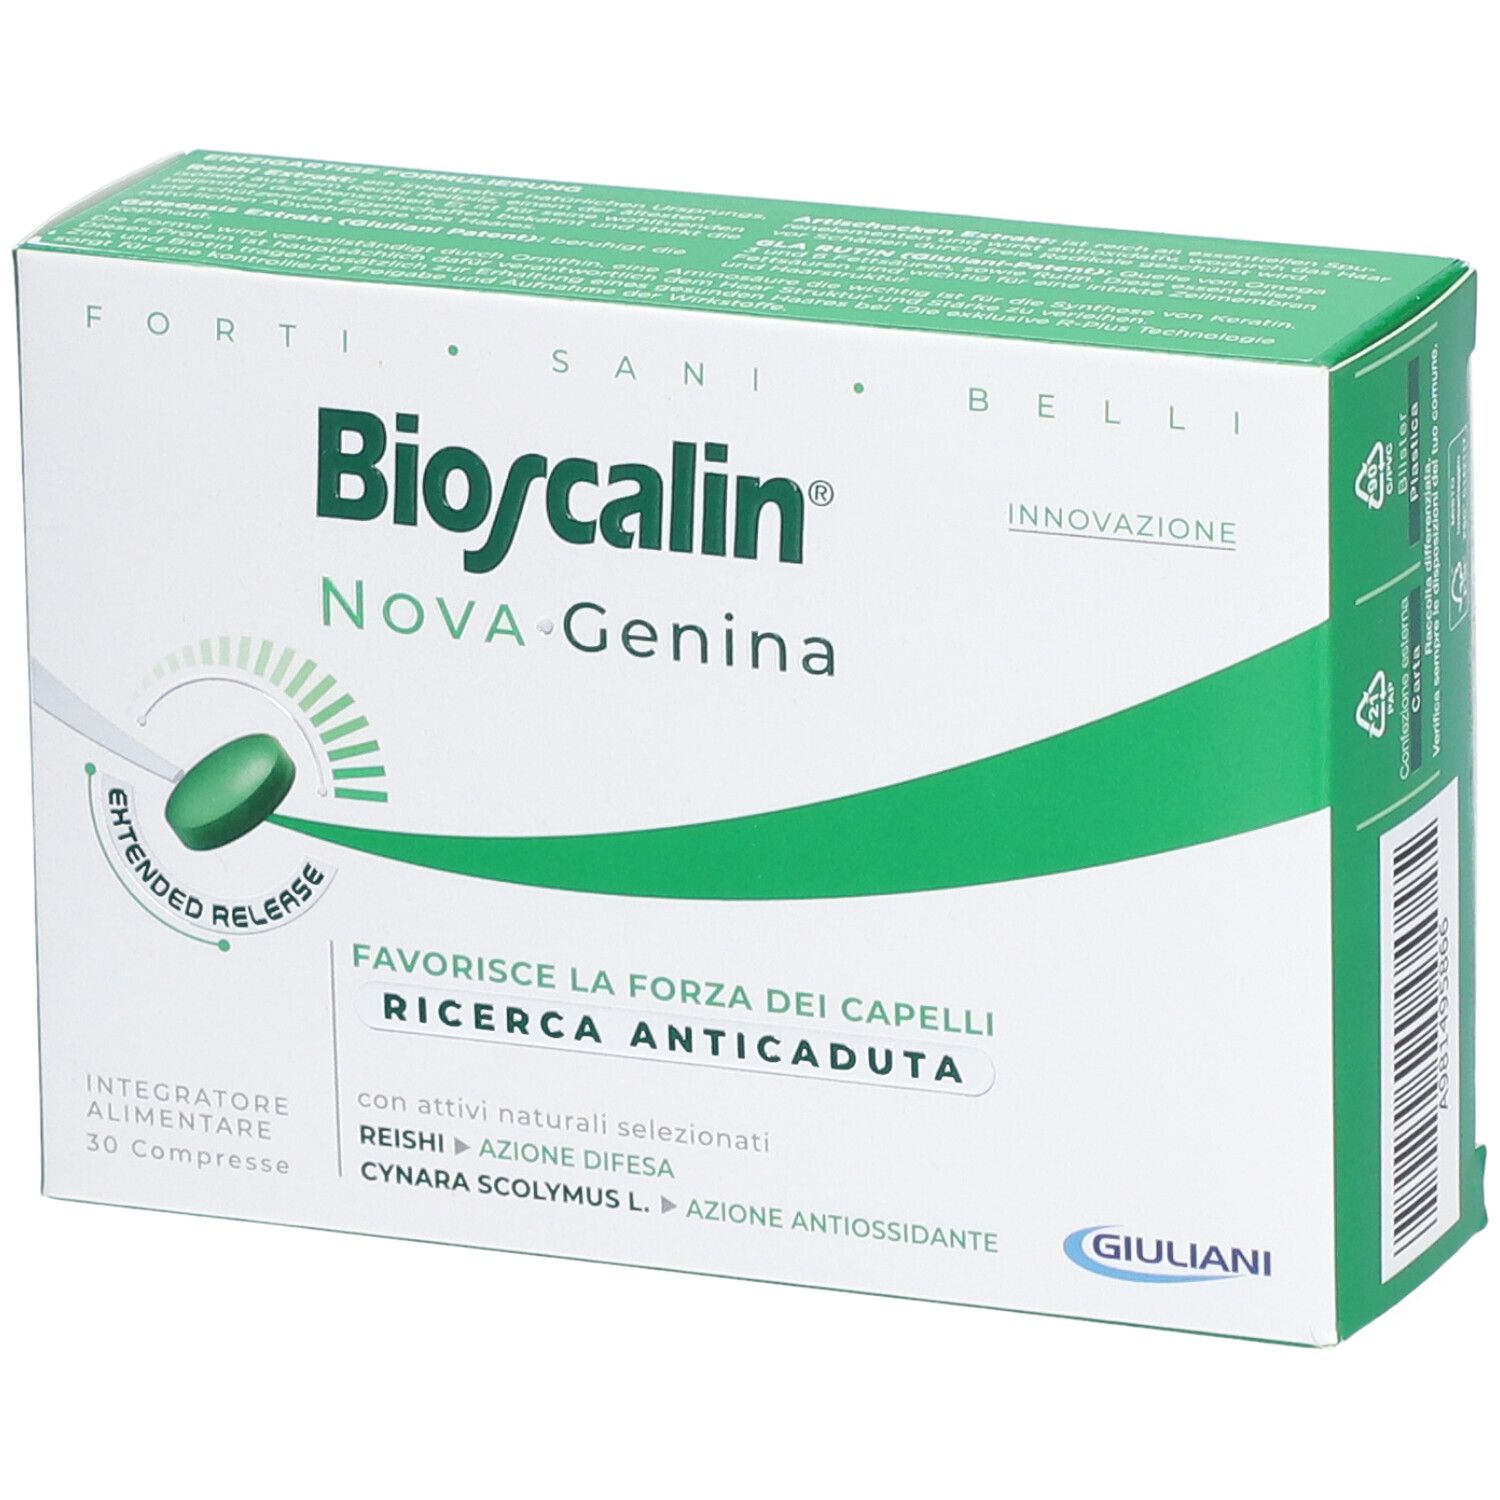 Bioscalin® Nova Genina